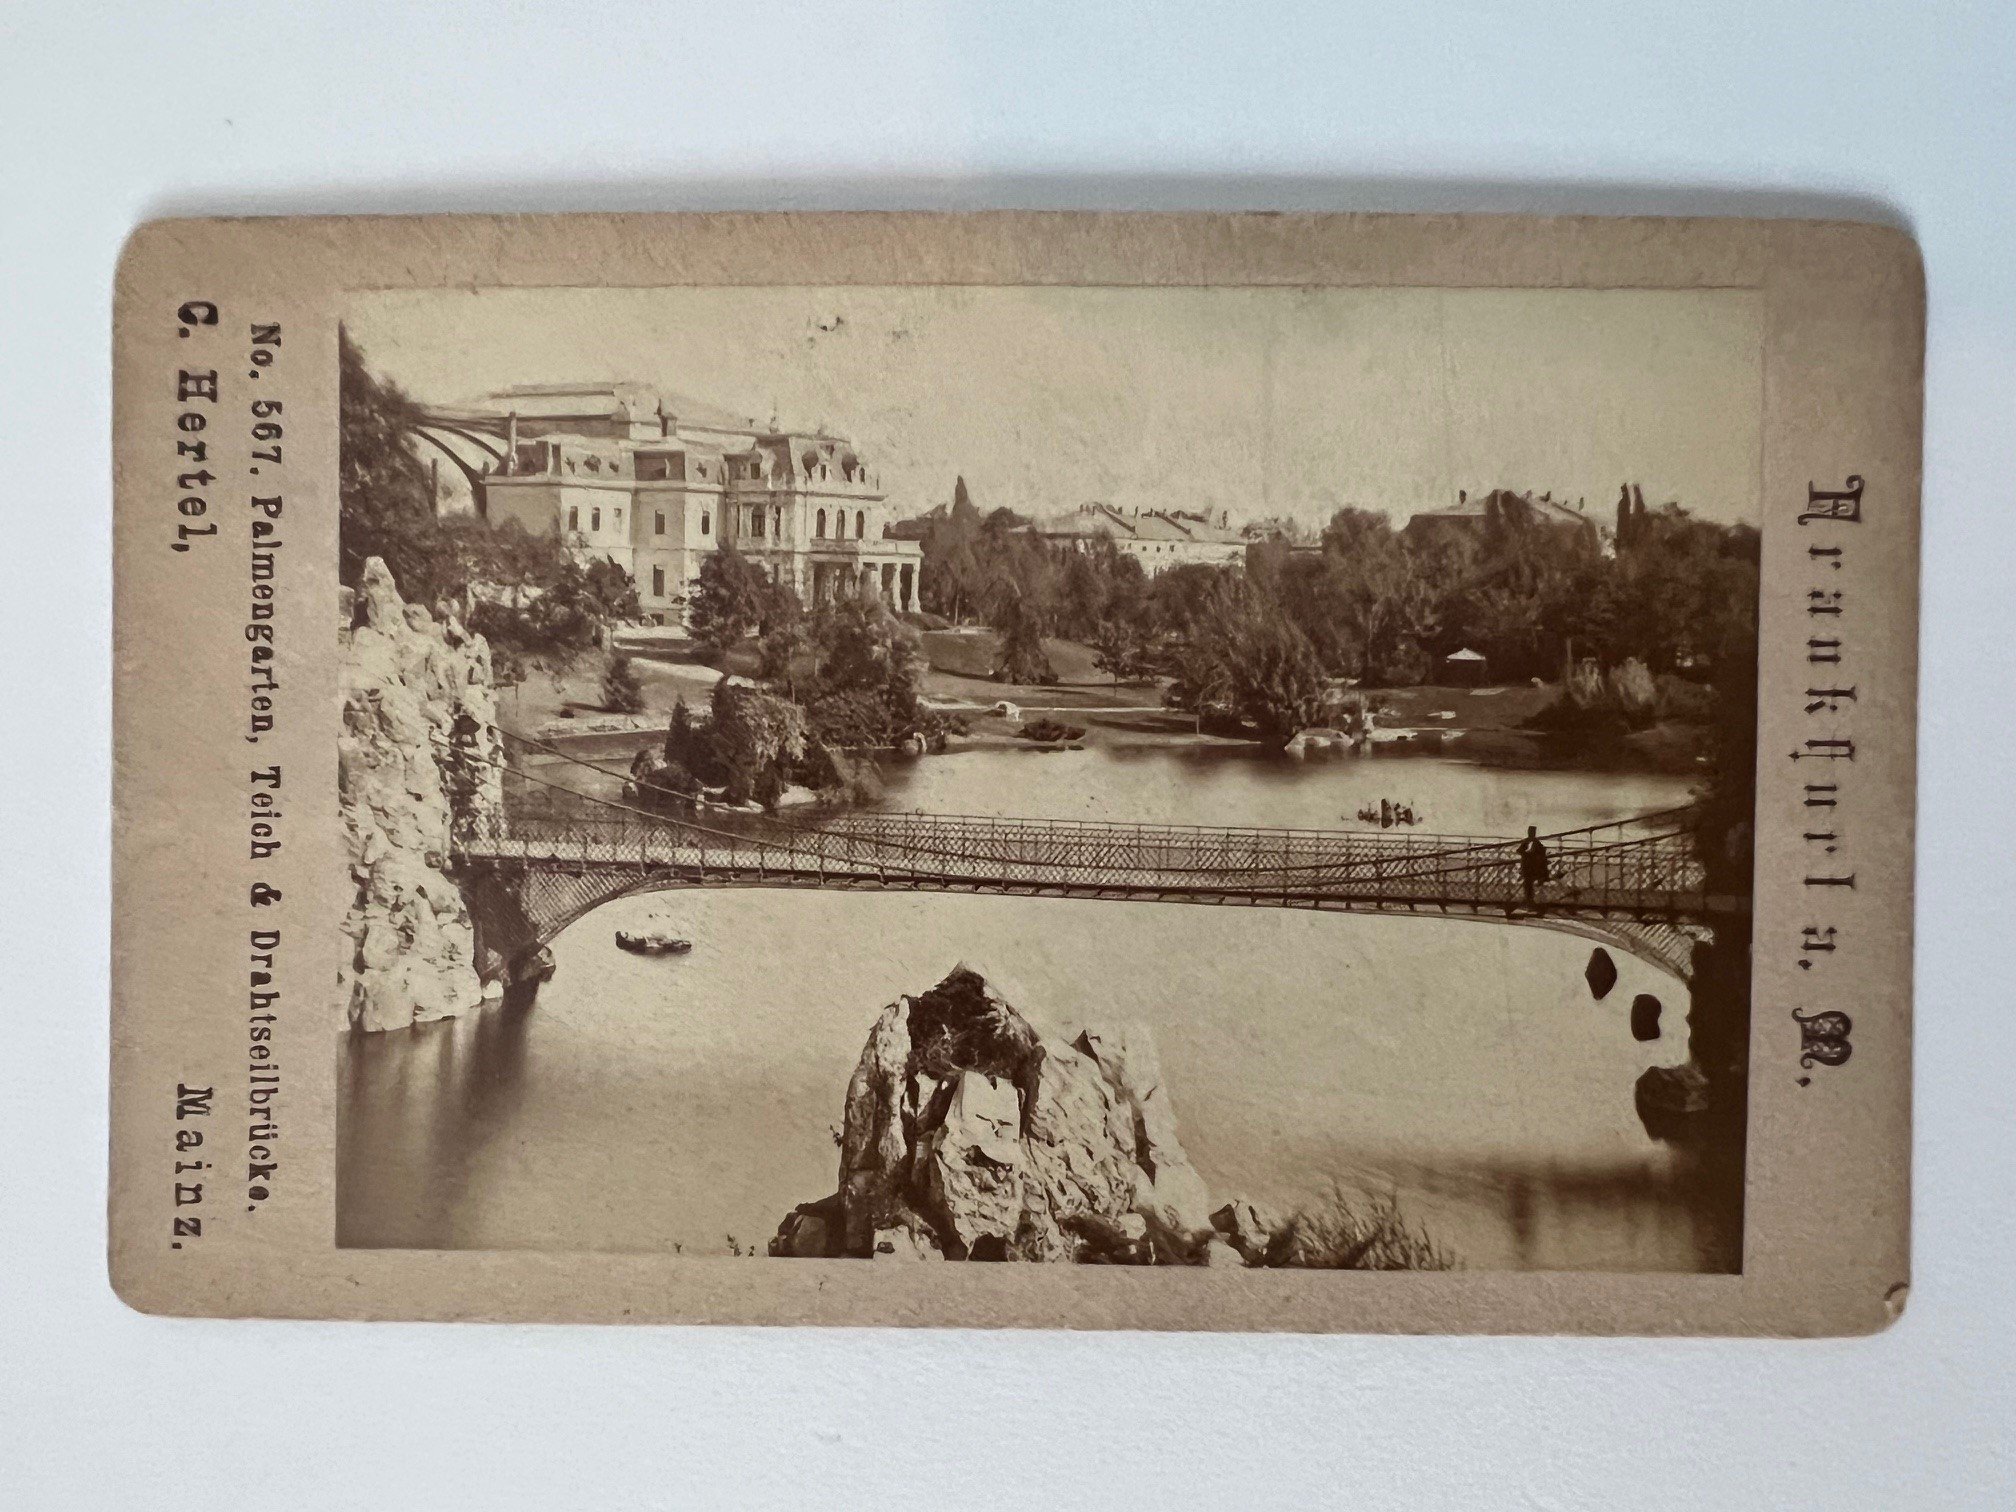 CdV, Carl Hertel, Frankfurt, Nr. 567, Palmengarten, Teich & Drahtseilbrücke, ca. 1886. (Taunus-Rhein-Main - Regionalgeschichtliche Sammlung Dr. Stefan Naas CC BY-NC-SA)